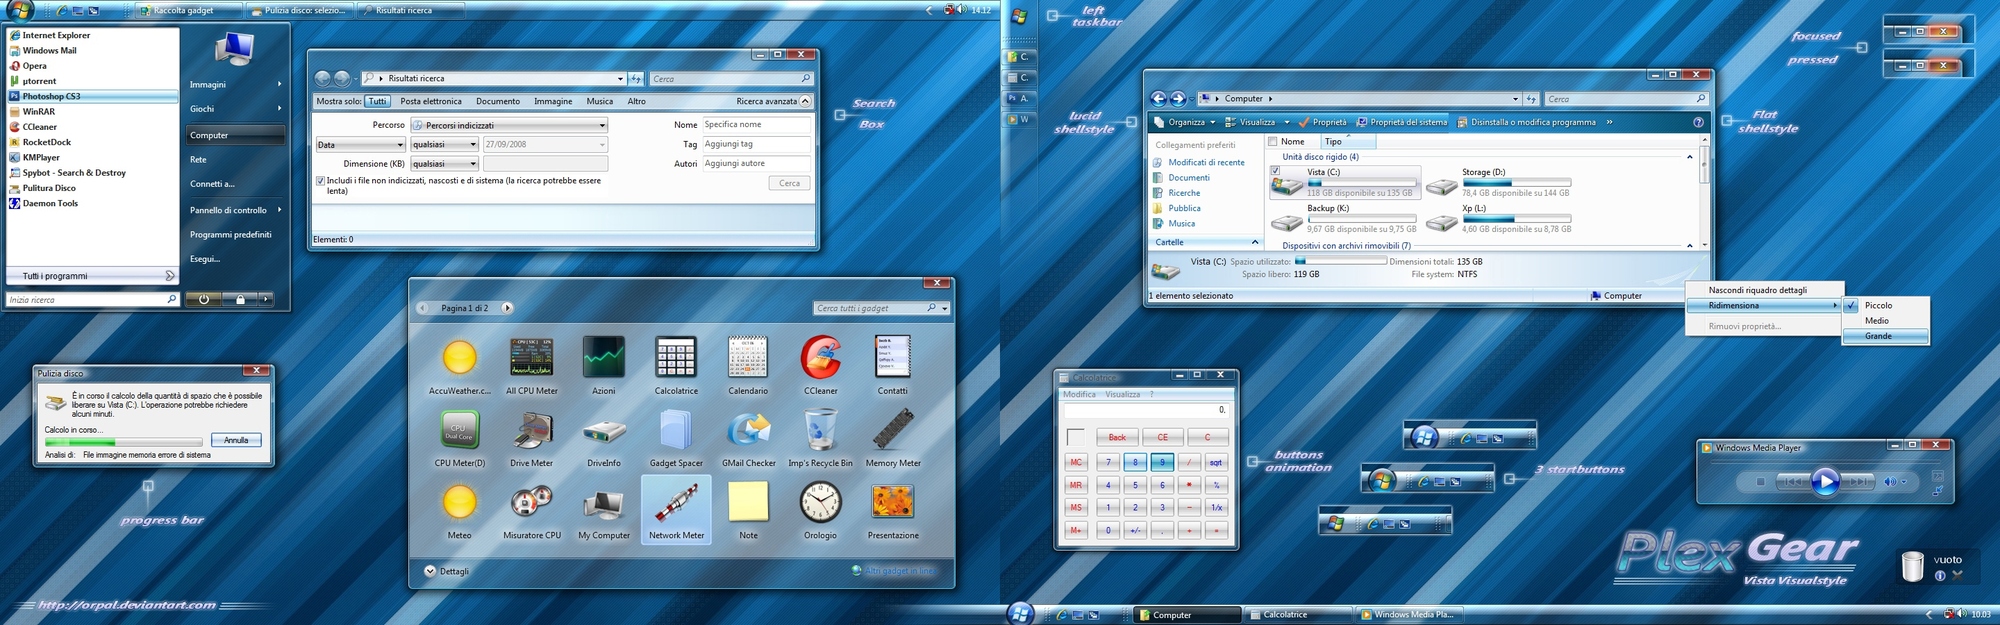 Windows 10 Desktop Theme Photo Retreival plexgear_by_orpal.jpg